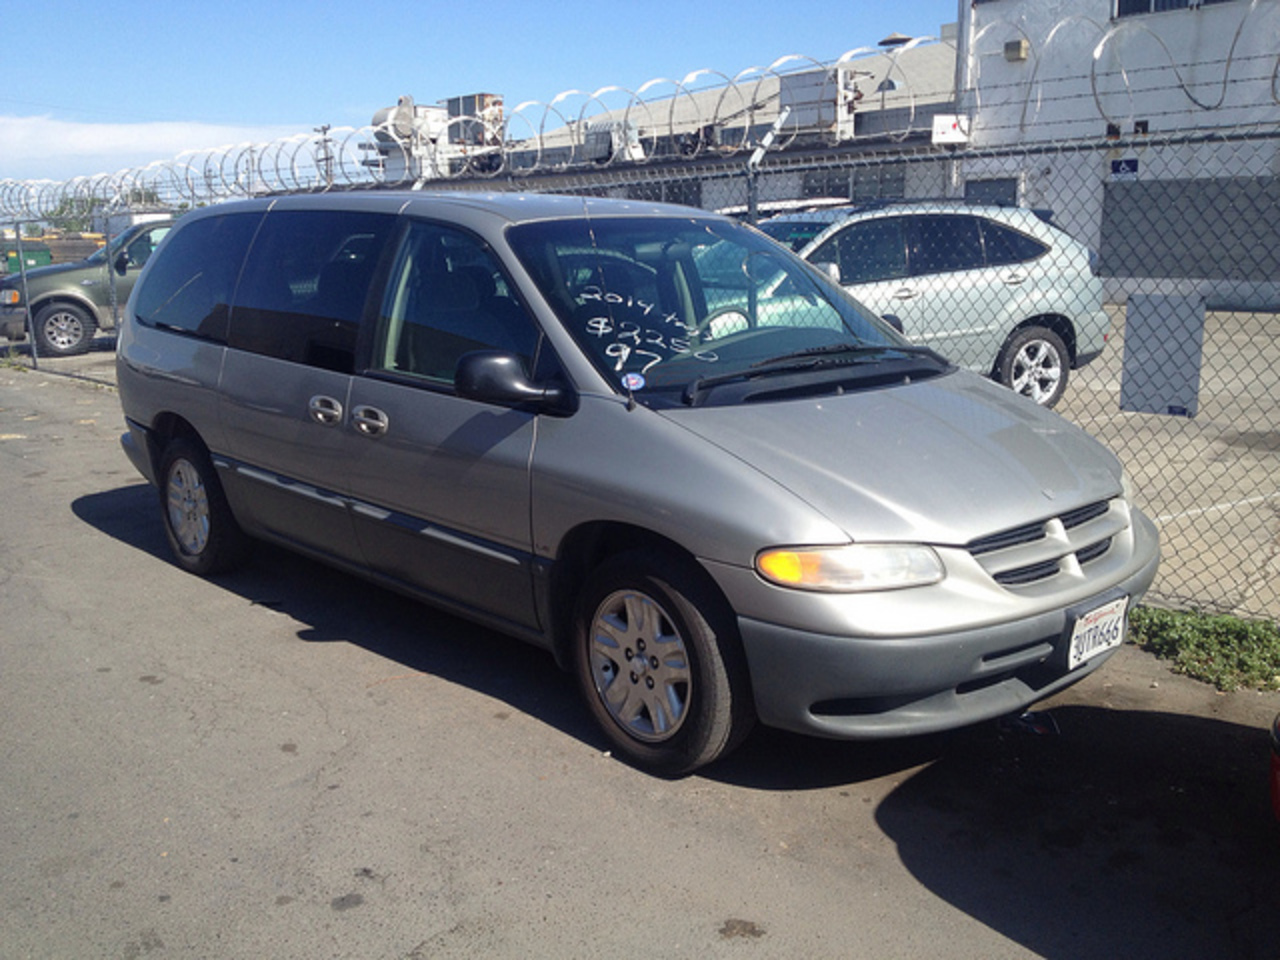 97 Dodge Caravan v6 auto 2014 tags runs good $2000/obo | Flickr ...